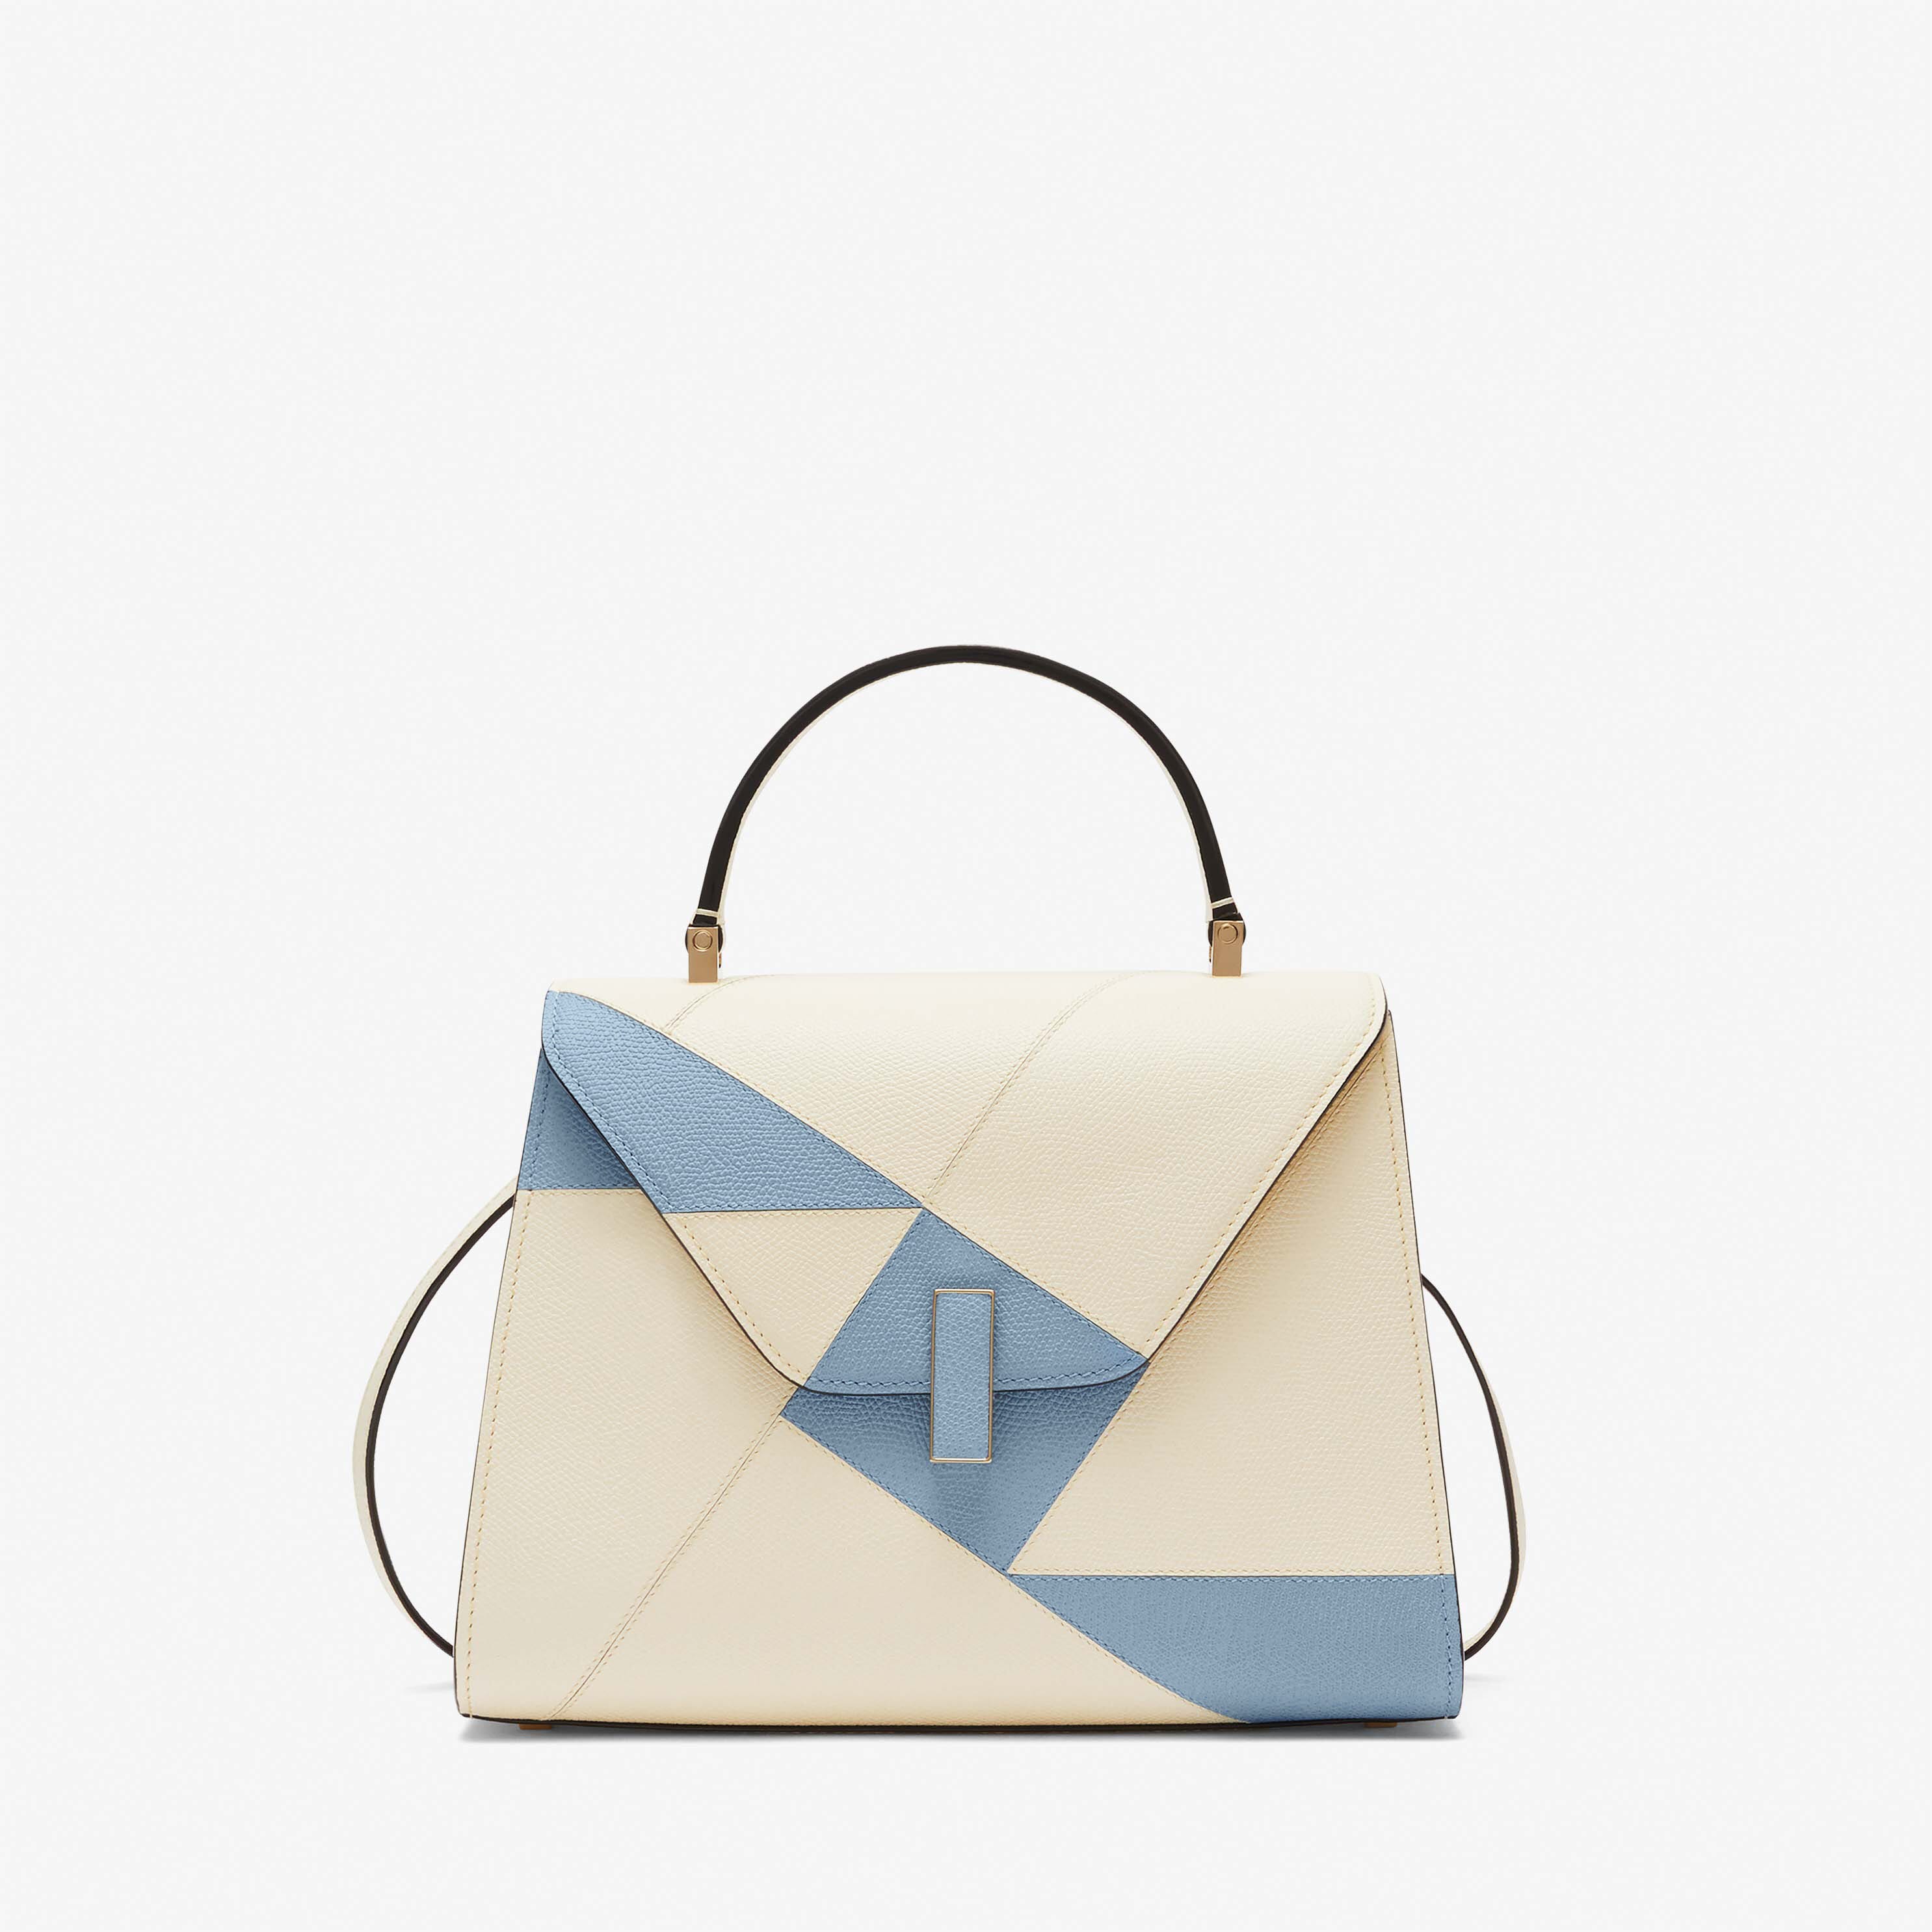 Iside Carousel Top handle Medium bag - Pergamena White/Shirt Blue - Vitello VS-Intarsio Rombo - Valextra - 1